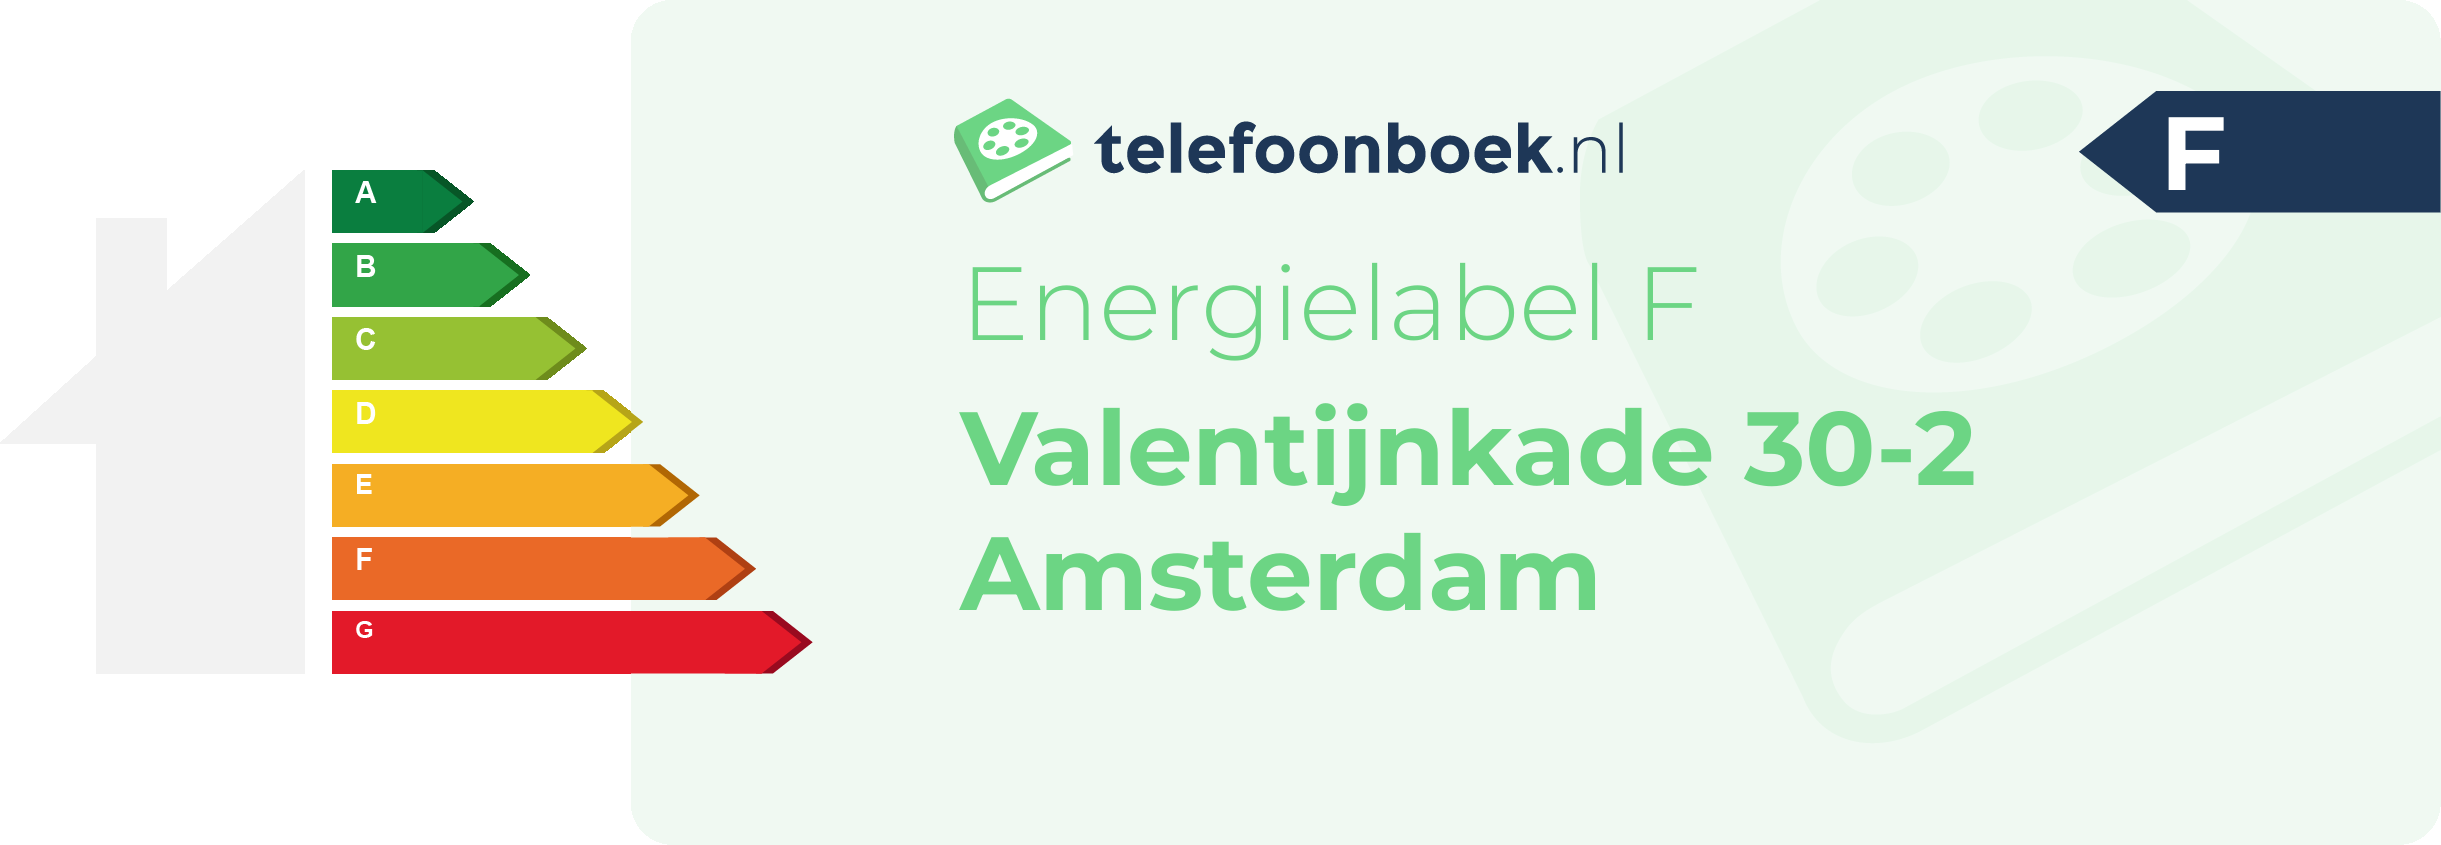 Energielabel Valentijnkade 30-2 Amsterdam